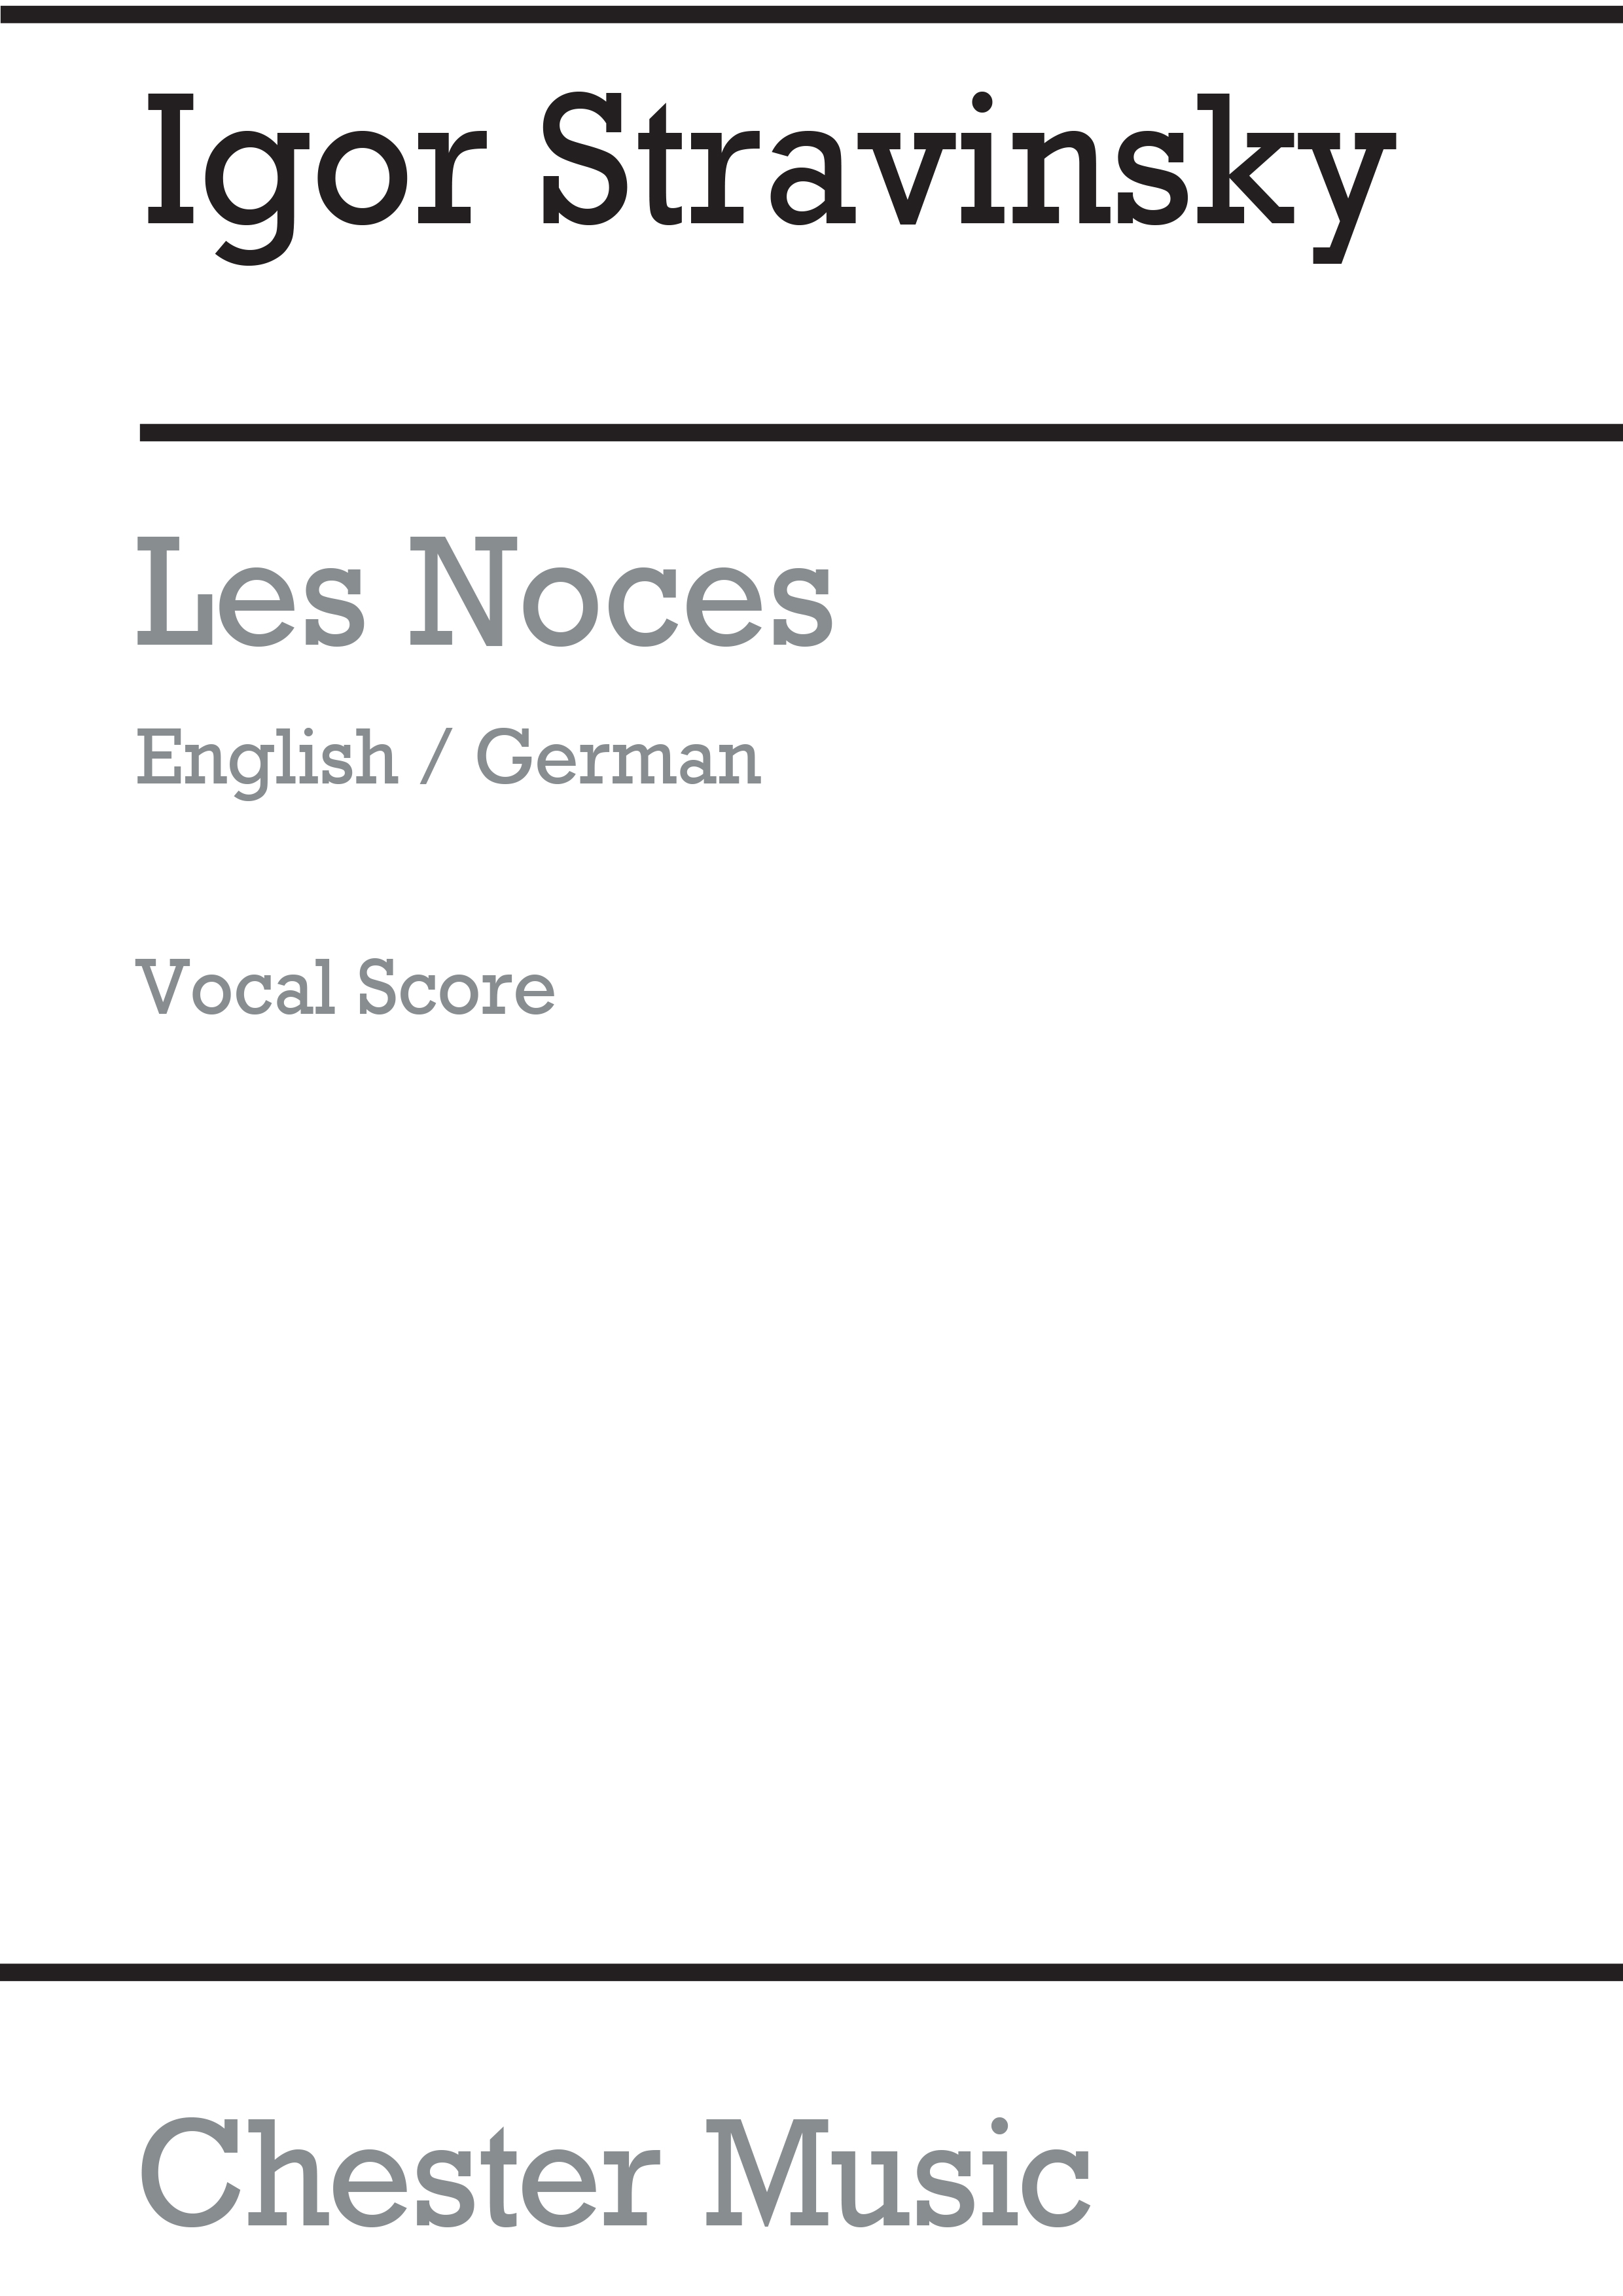 Igor Stravinsky: Les Noces (English/German Vocal Score): SATB: Vocal Score